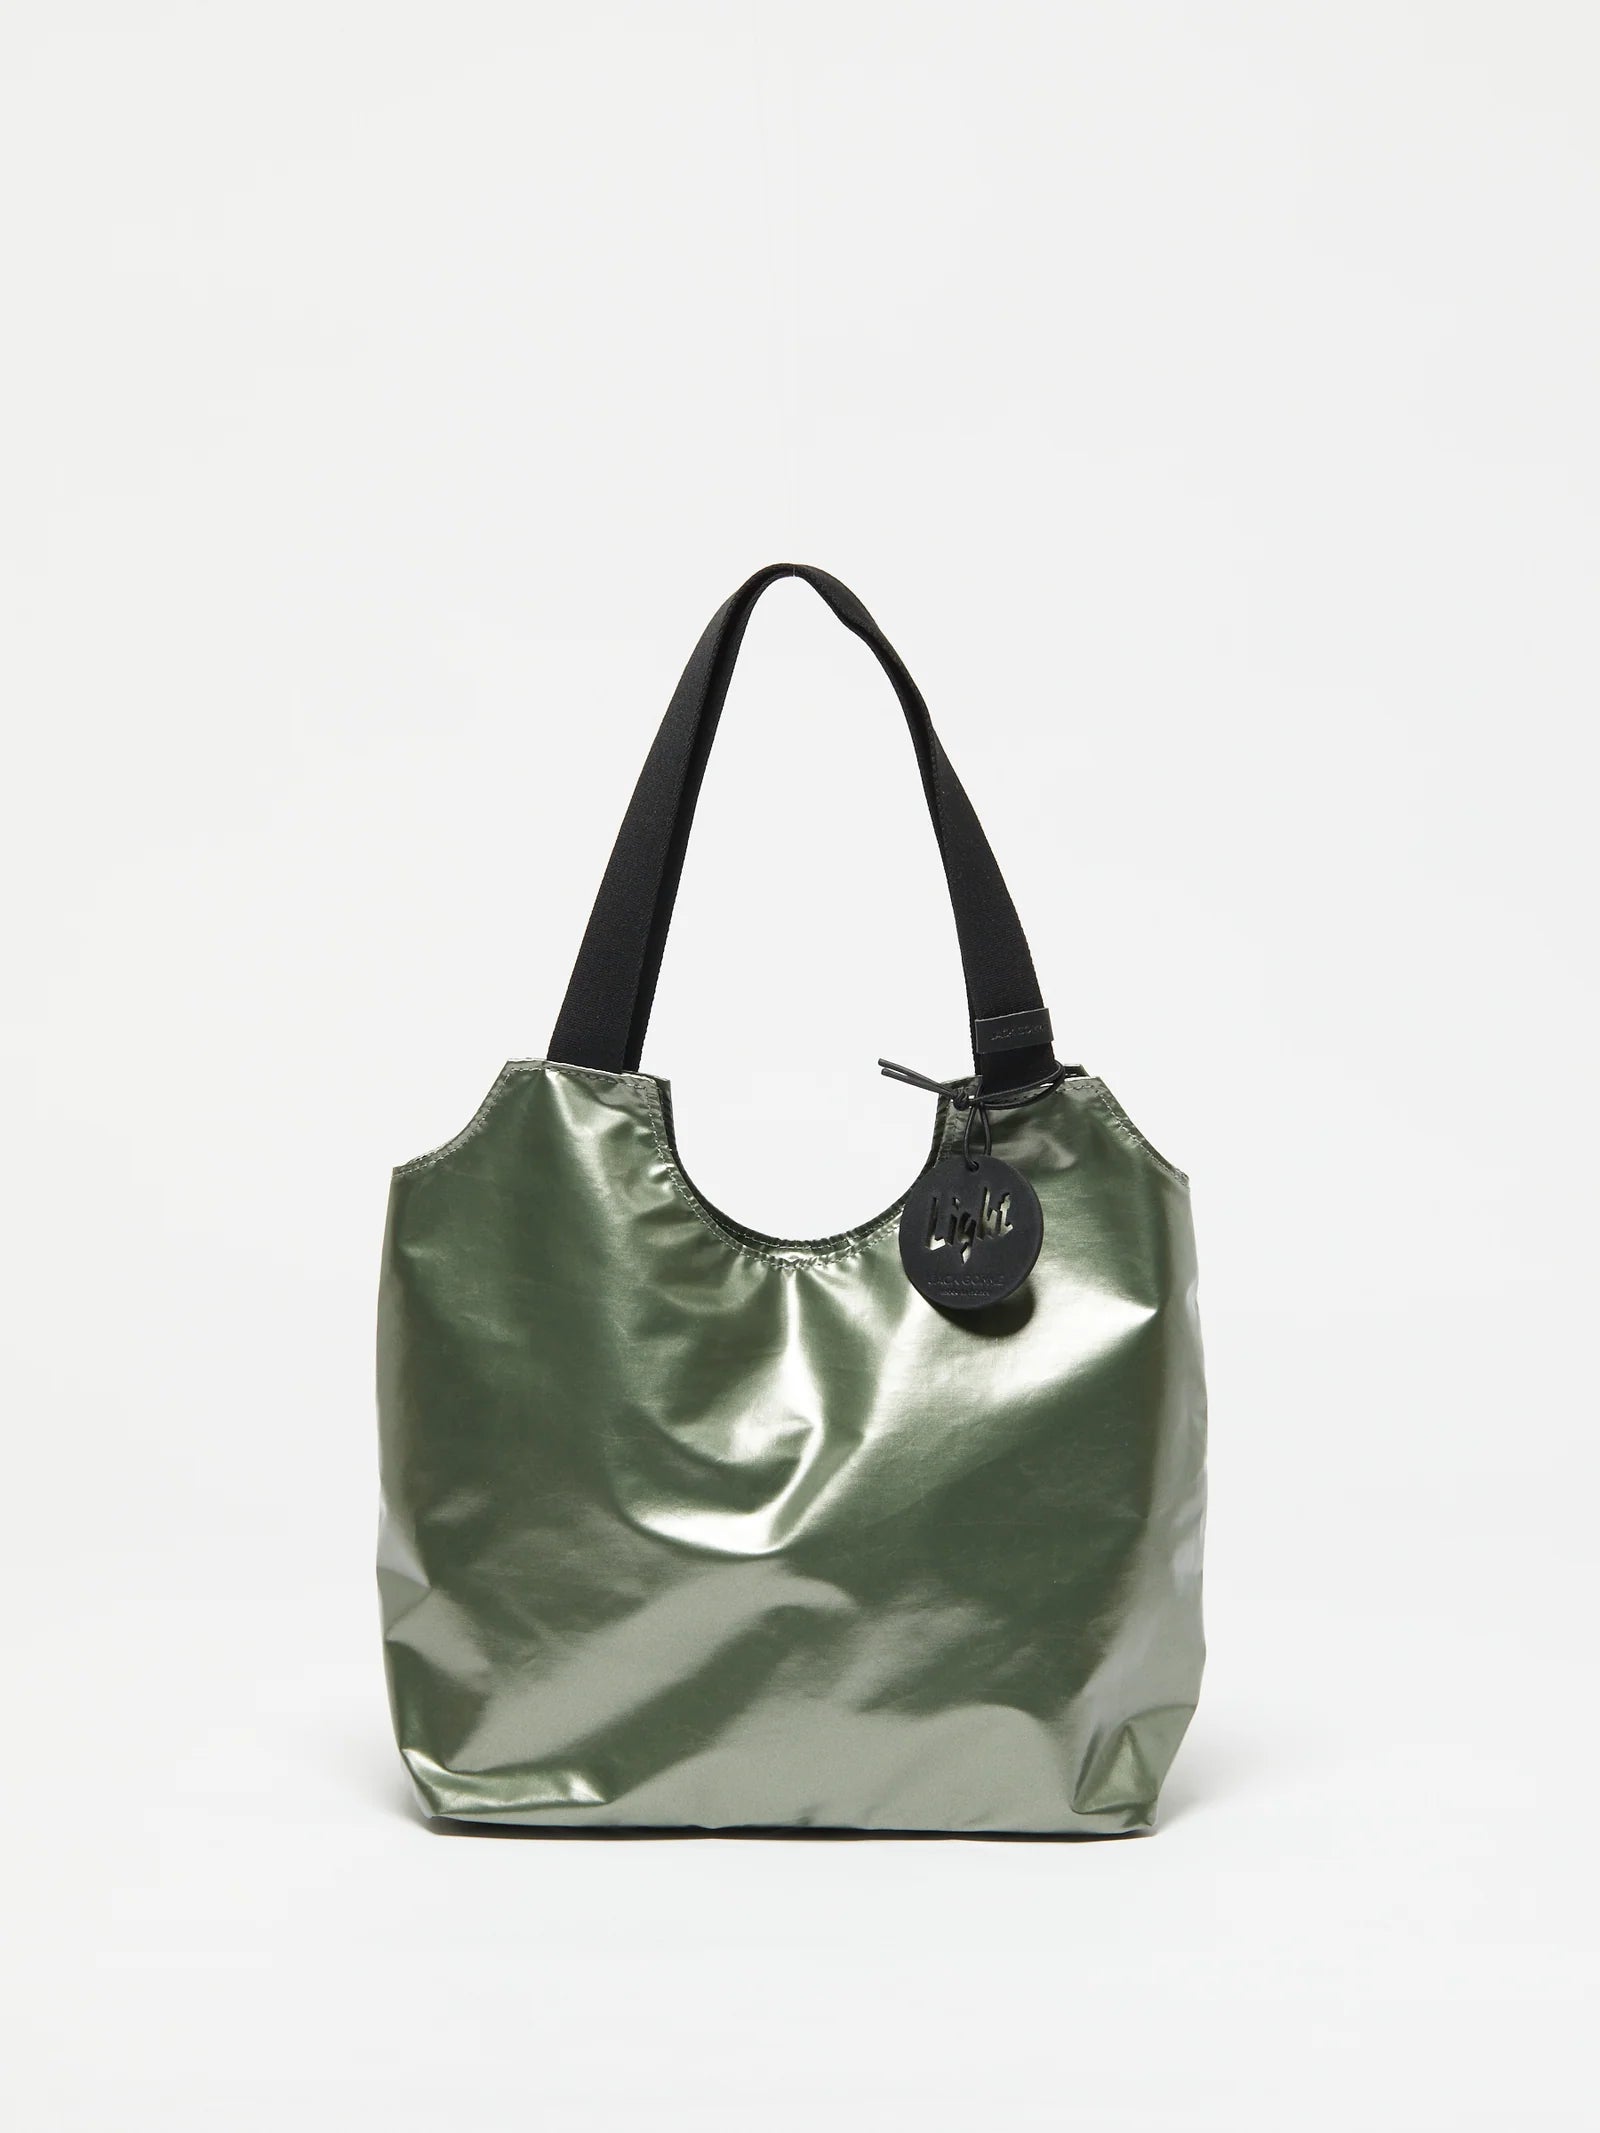 Tilly Light Shopping Bag - Seaweed